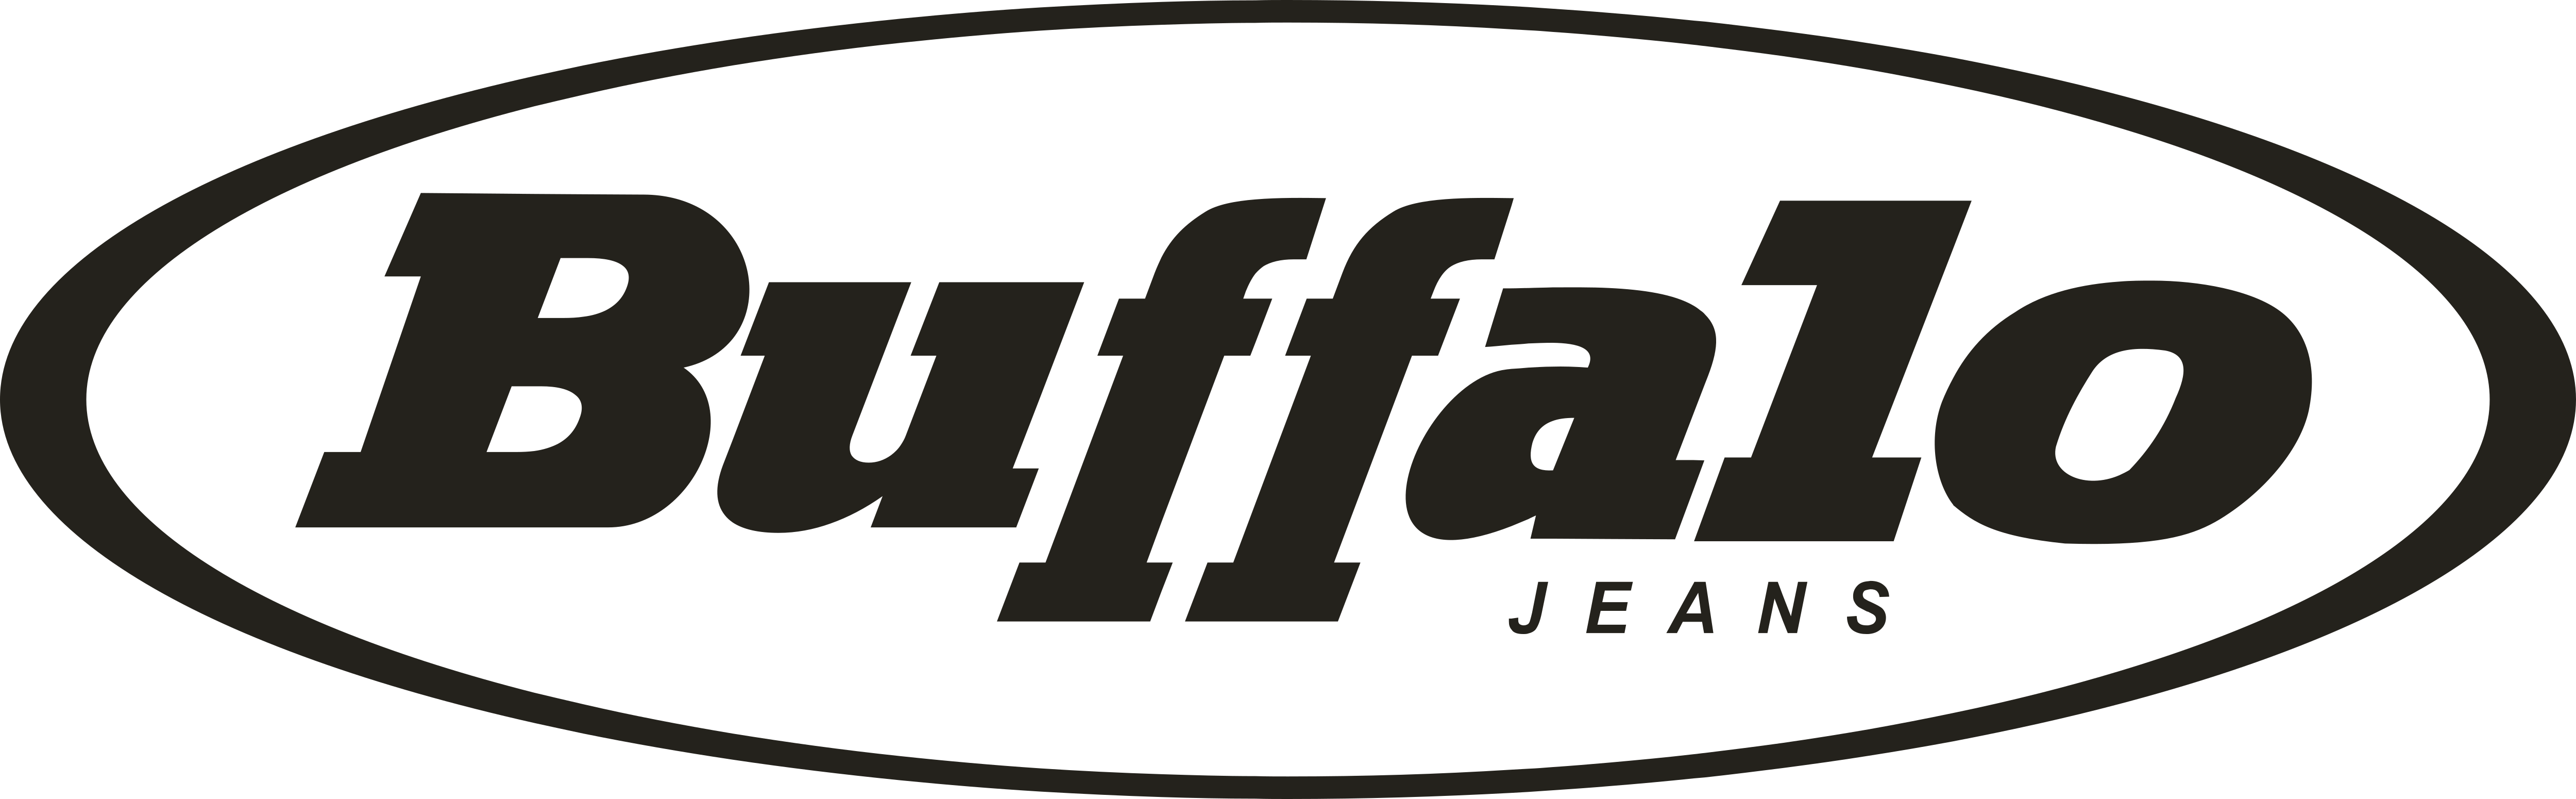 Update 77+ buffalo logo brand latest - ceg.edu.vn